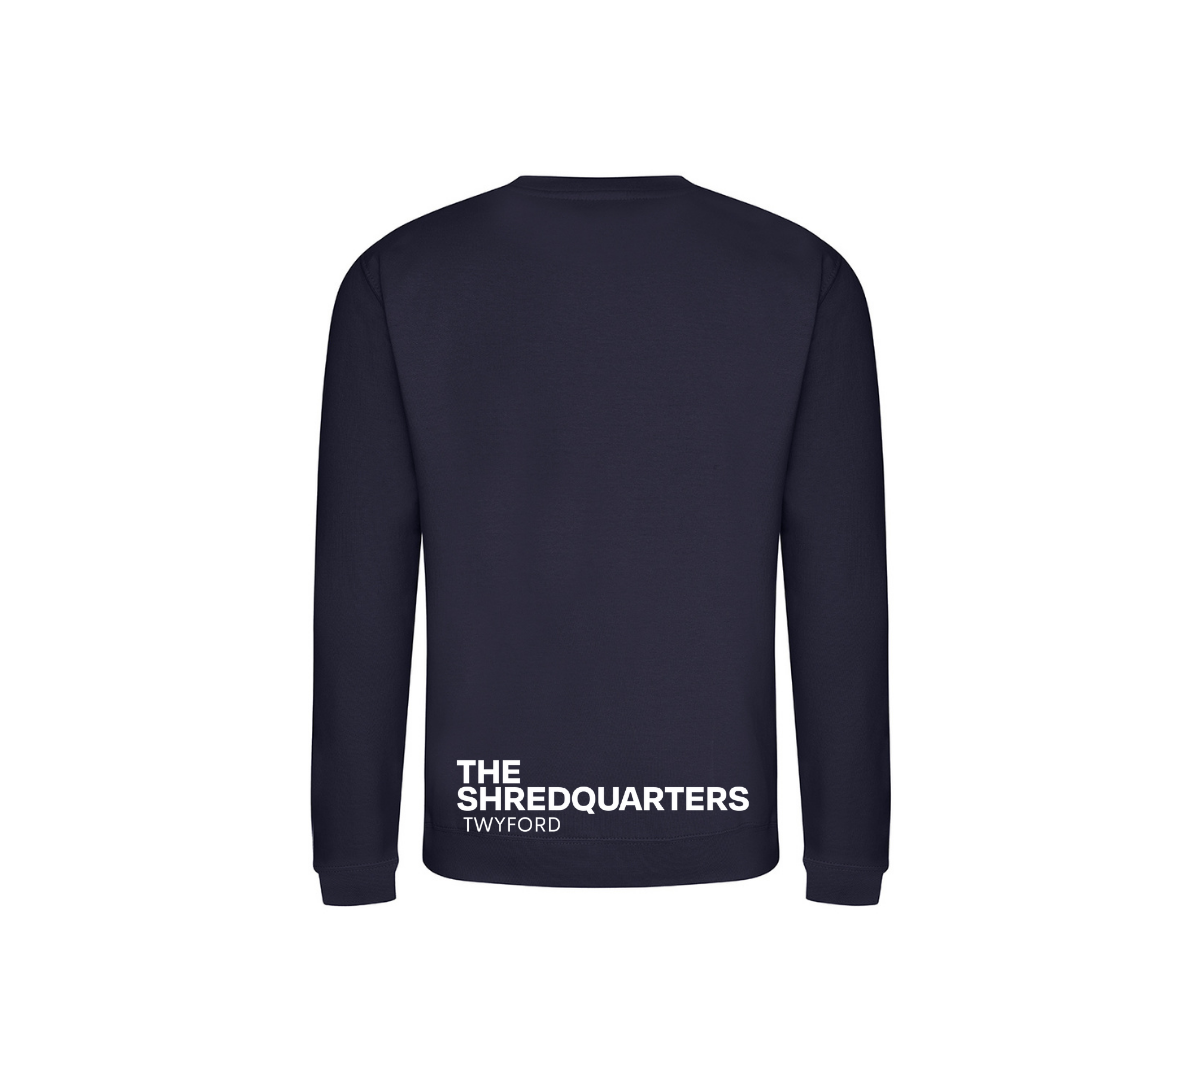 The Shredquarters Twyford Sweater